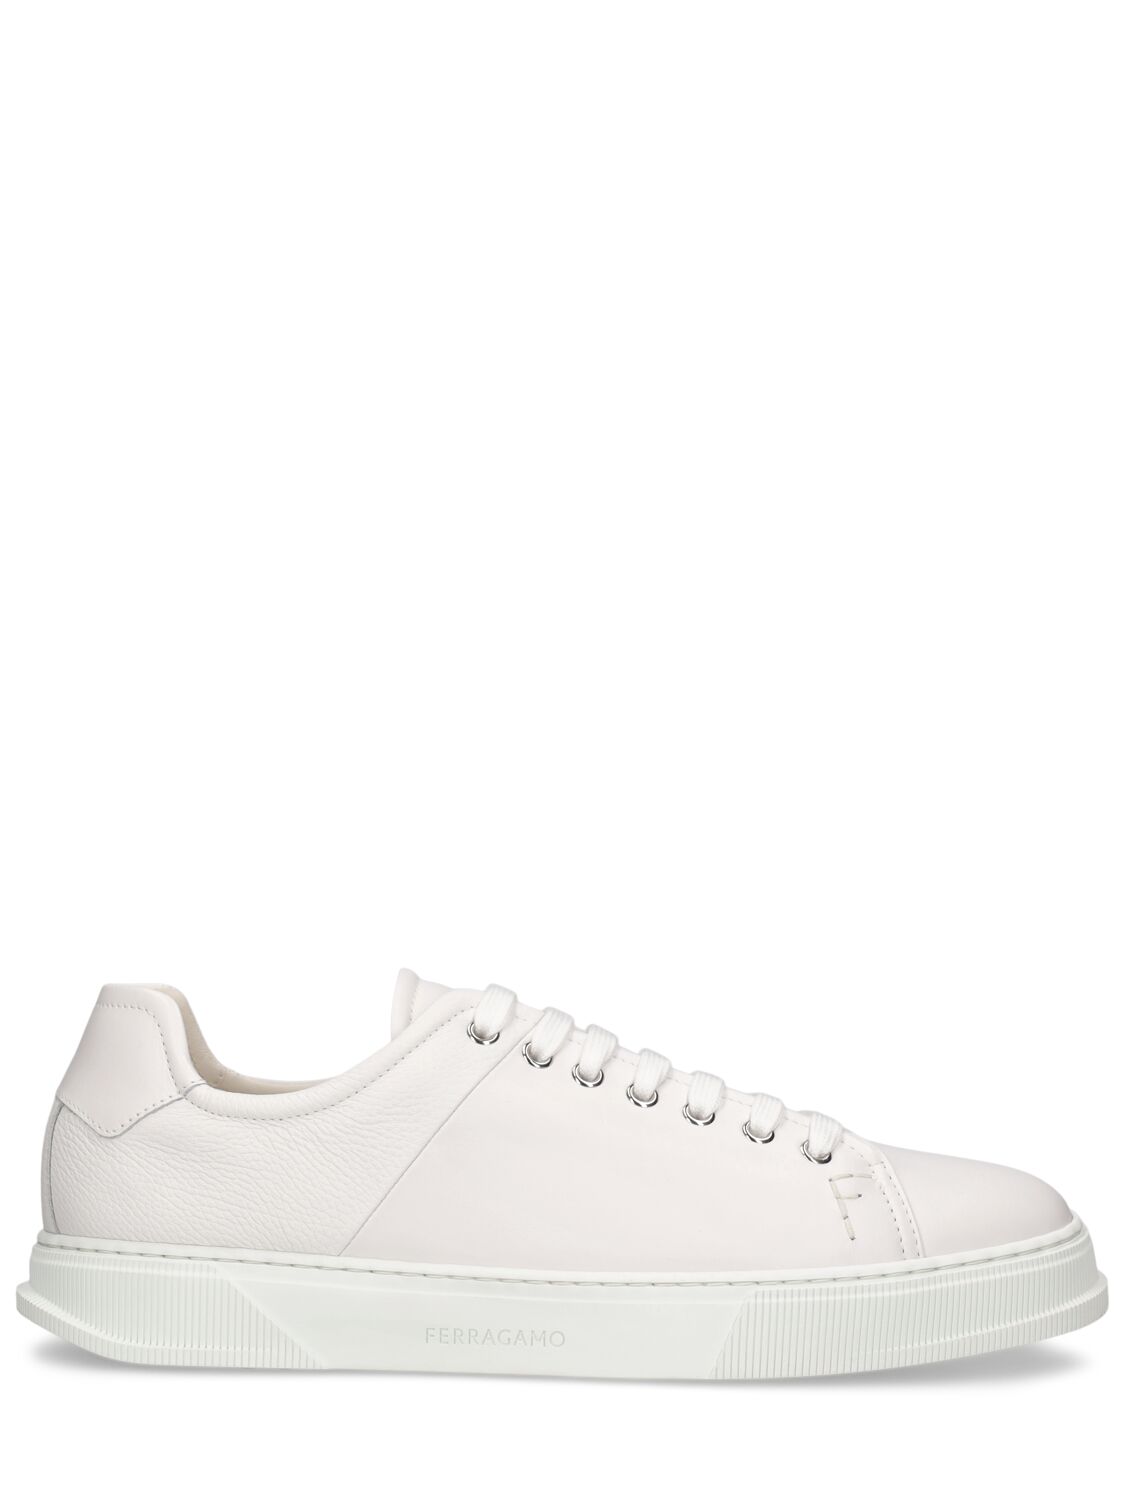 Ferragamo Clayton Leather Sneakers In Optic White